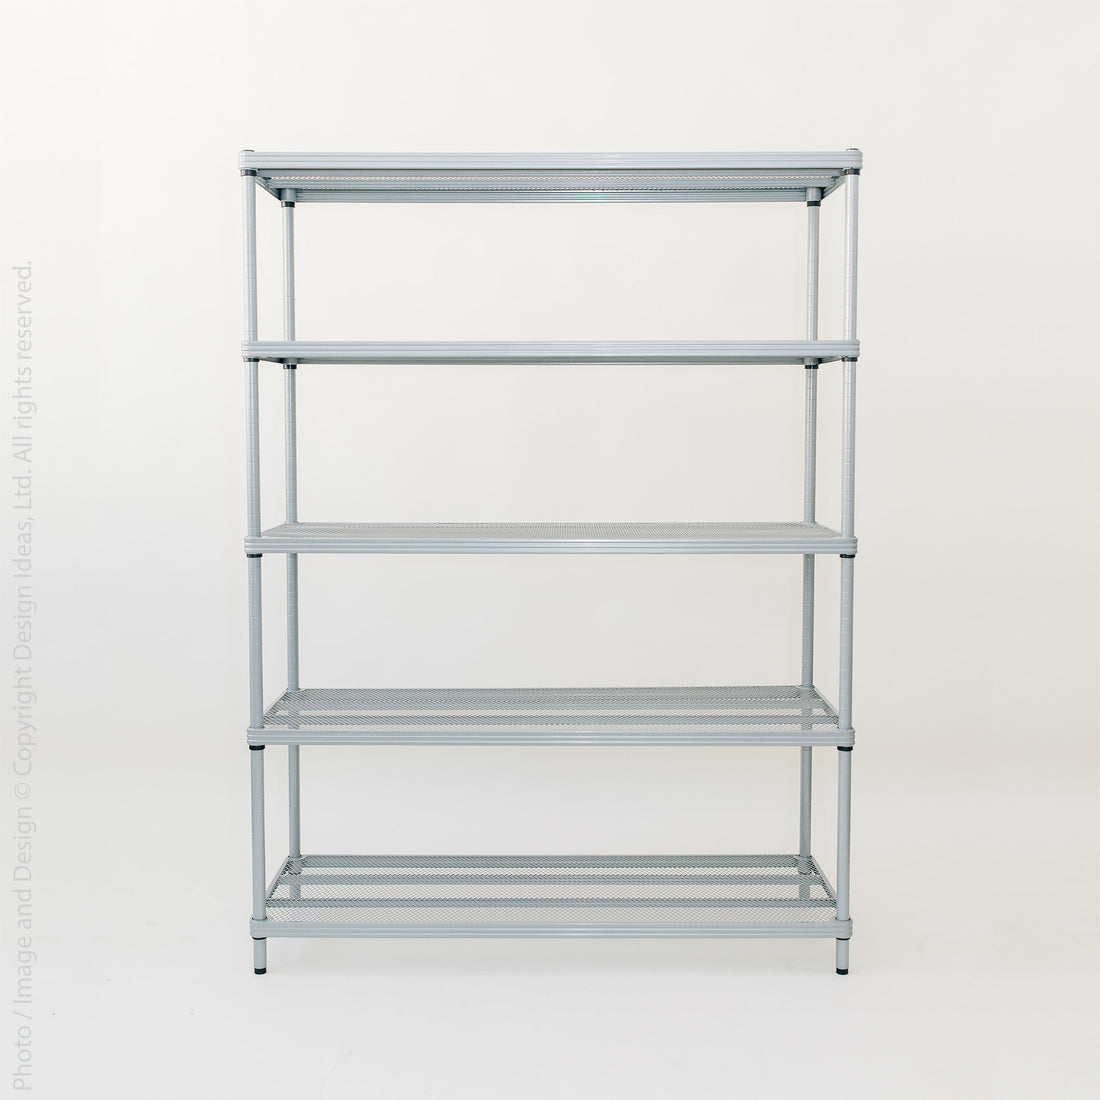 MeshWorks® epoxy coated steel shelving unit, 5 tier